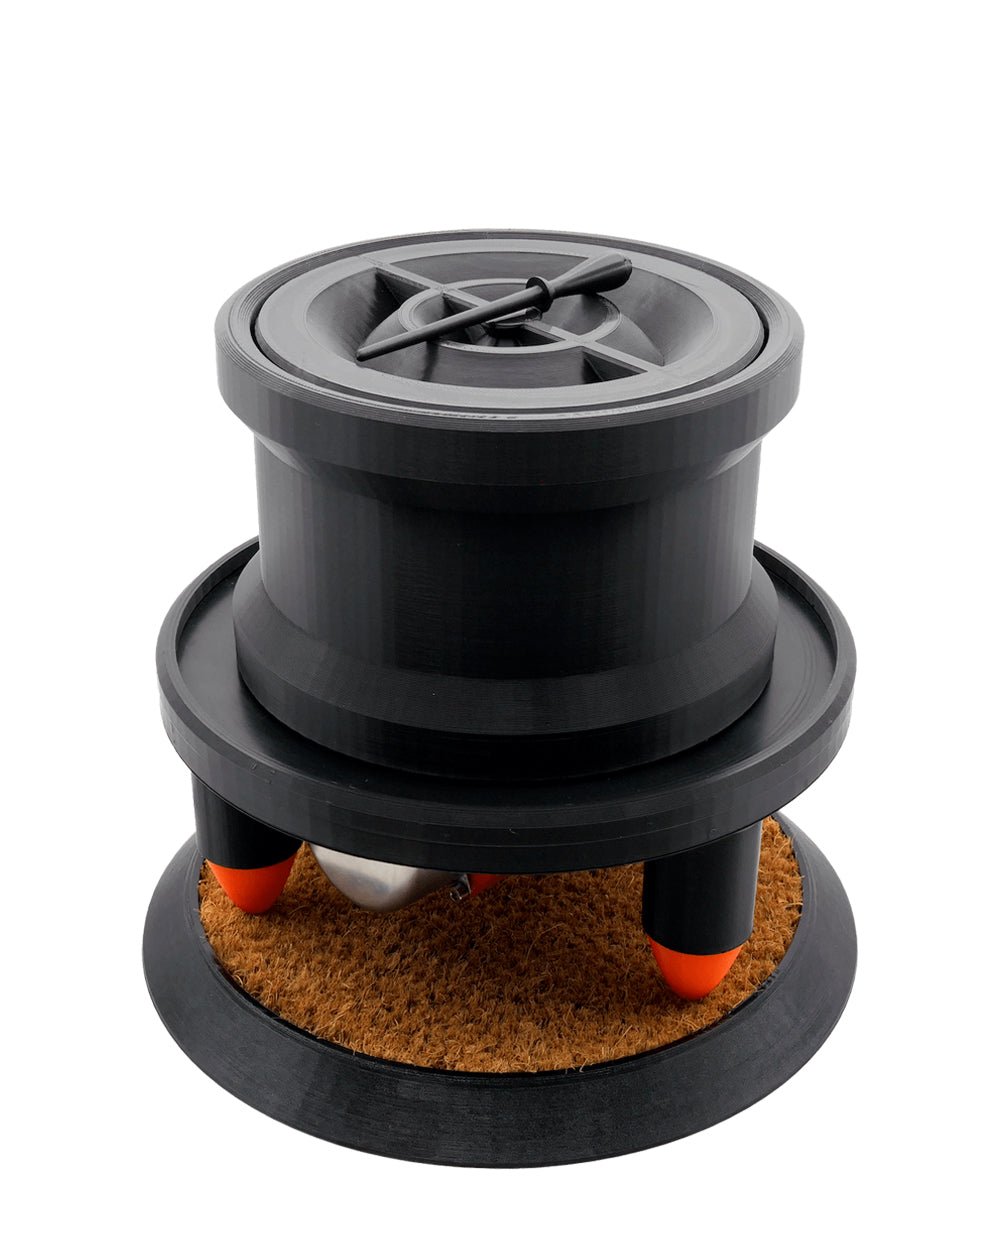 HUMBOLDT | Black Pre-Rolled Cones Filling Machine Starter Kit 98mm | Fill 121 Cones Per Run - 1